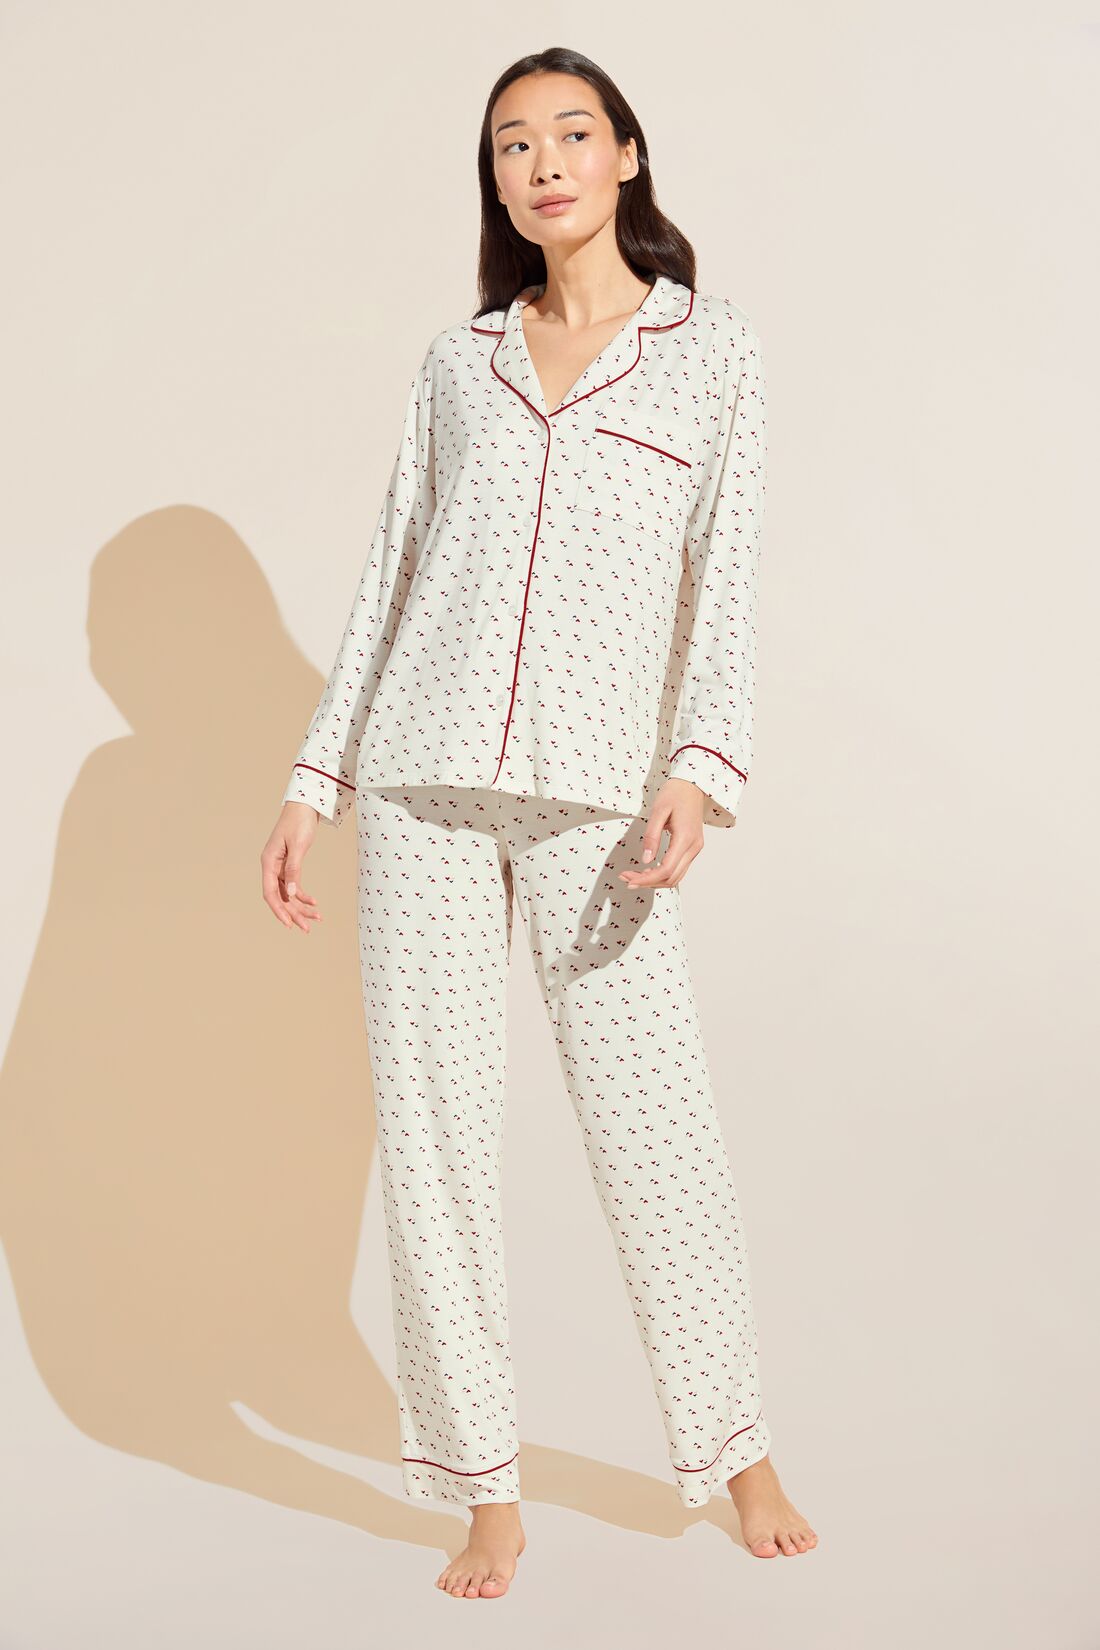 Womens Valentine's Day Short Sleeve Love Letter Print Modal Pajamas